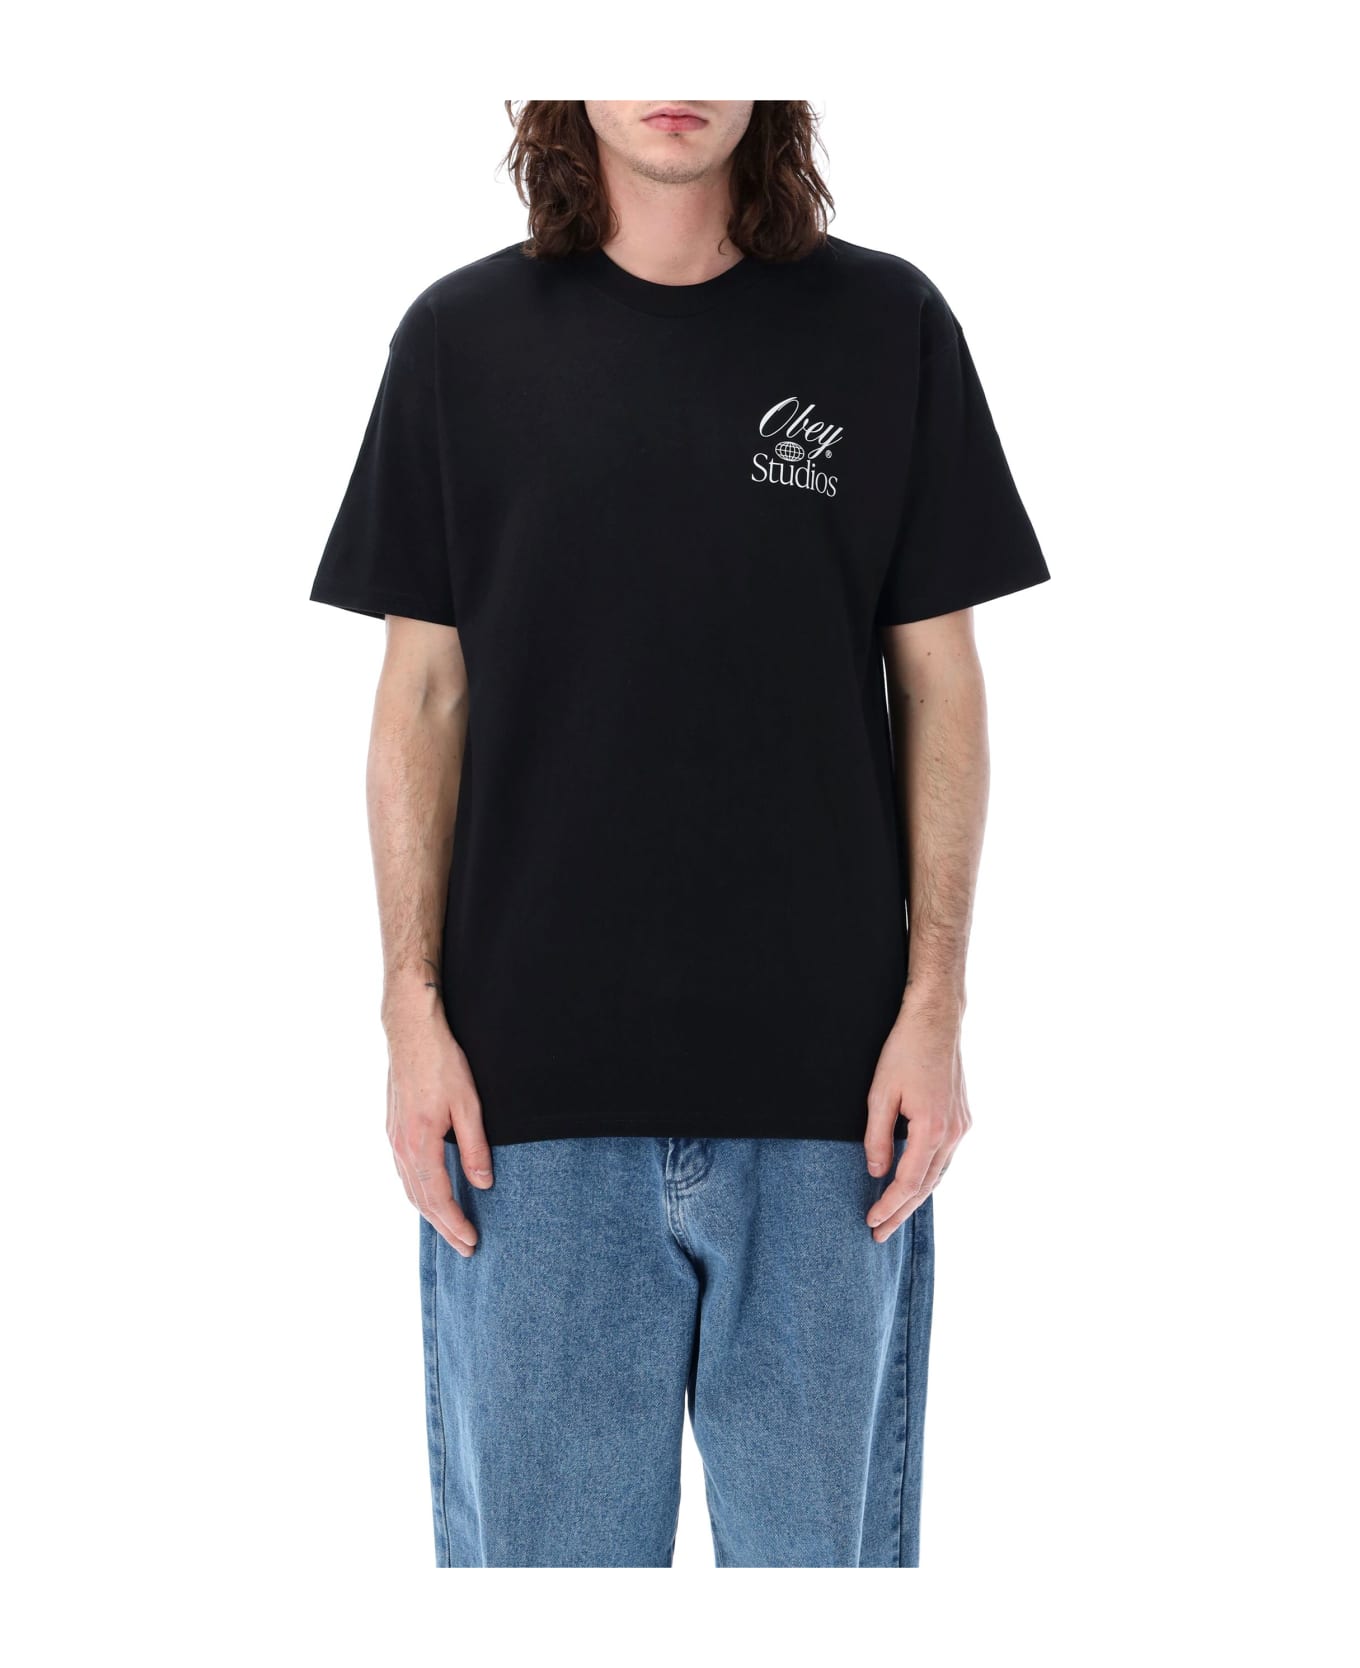 Obey Studios Worldwide T-shirt - BLACK